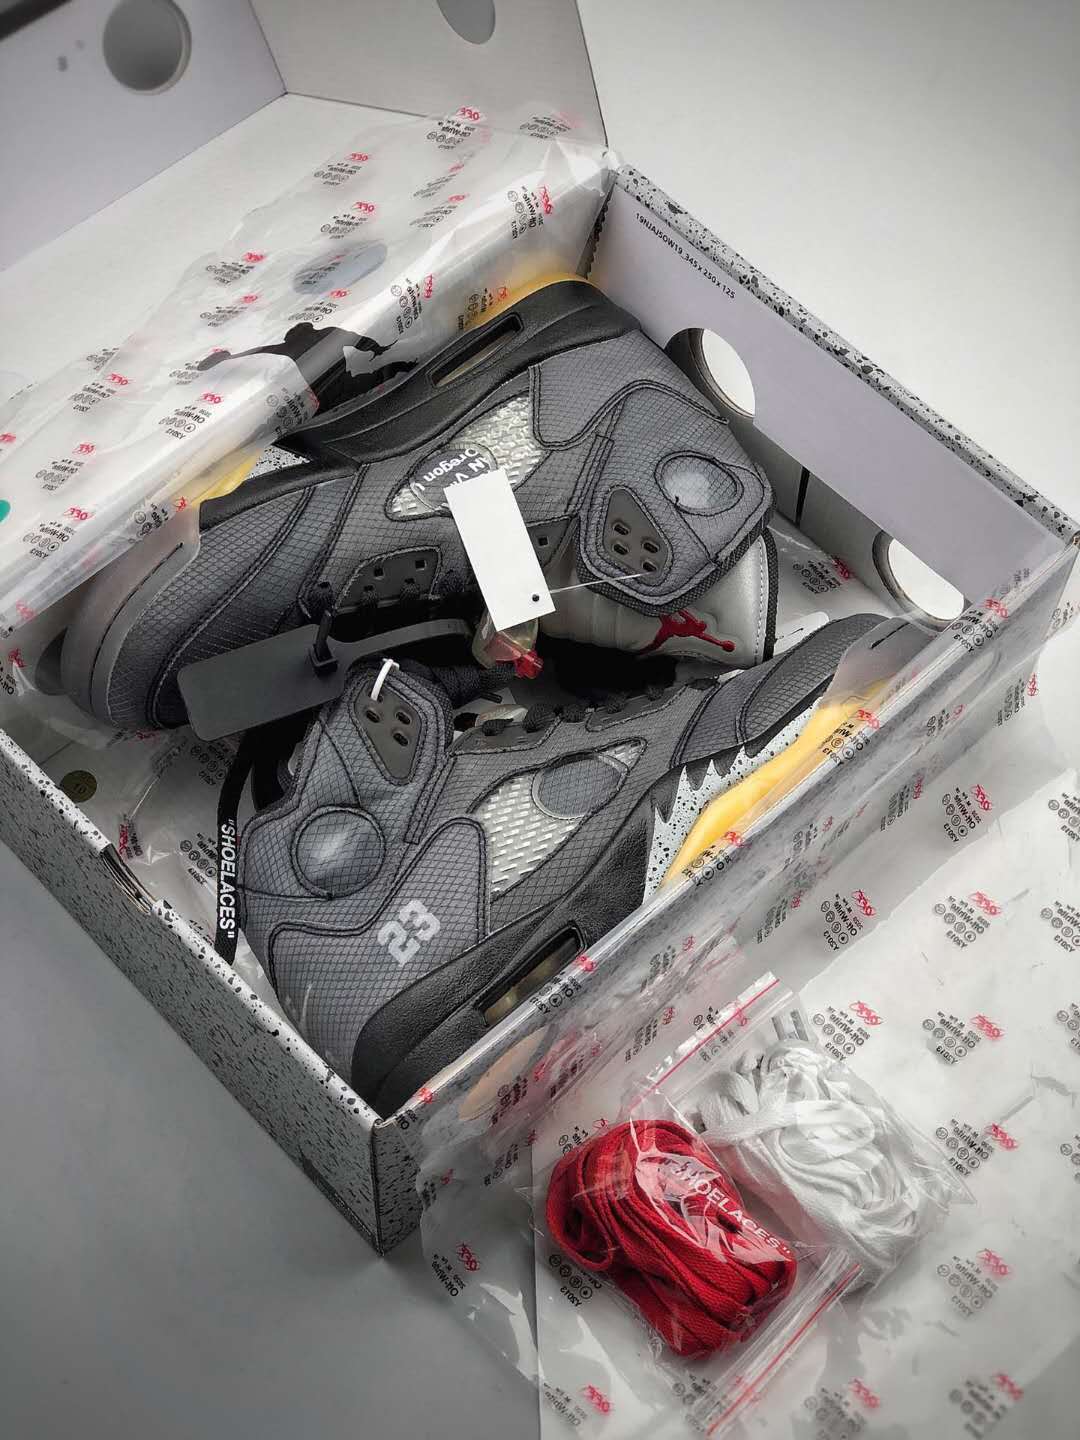 Off-White x Air Jordan 5 Retro SP 'Muslin' CT8480-001: Supreme Collaboration for Sneaker Collectors